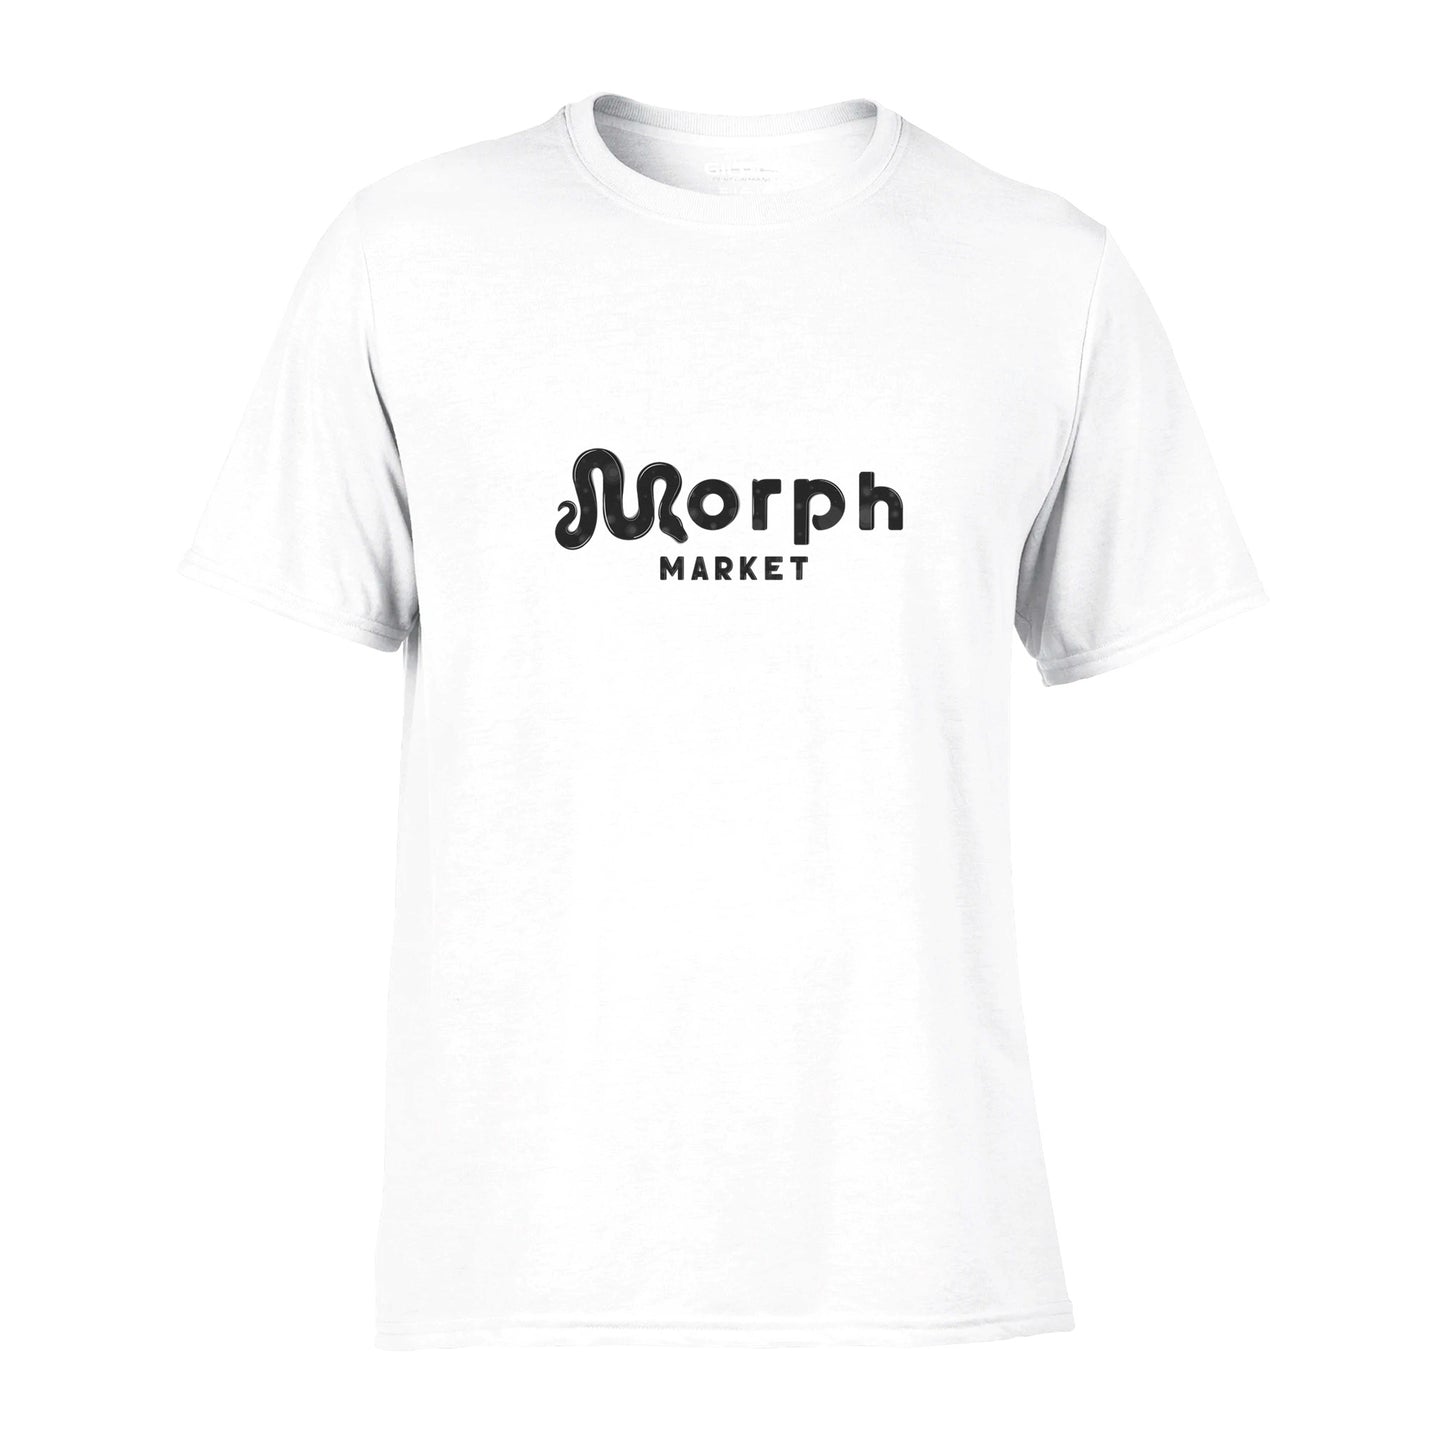 Morph Market (Dark Circles) - Performance Unisex Crewneck T-shirt